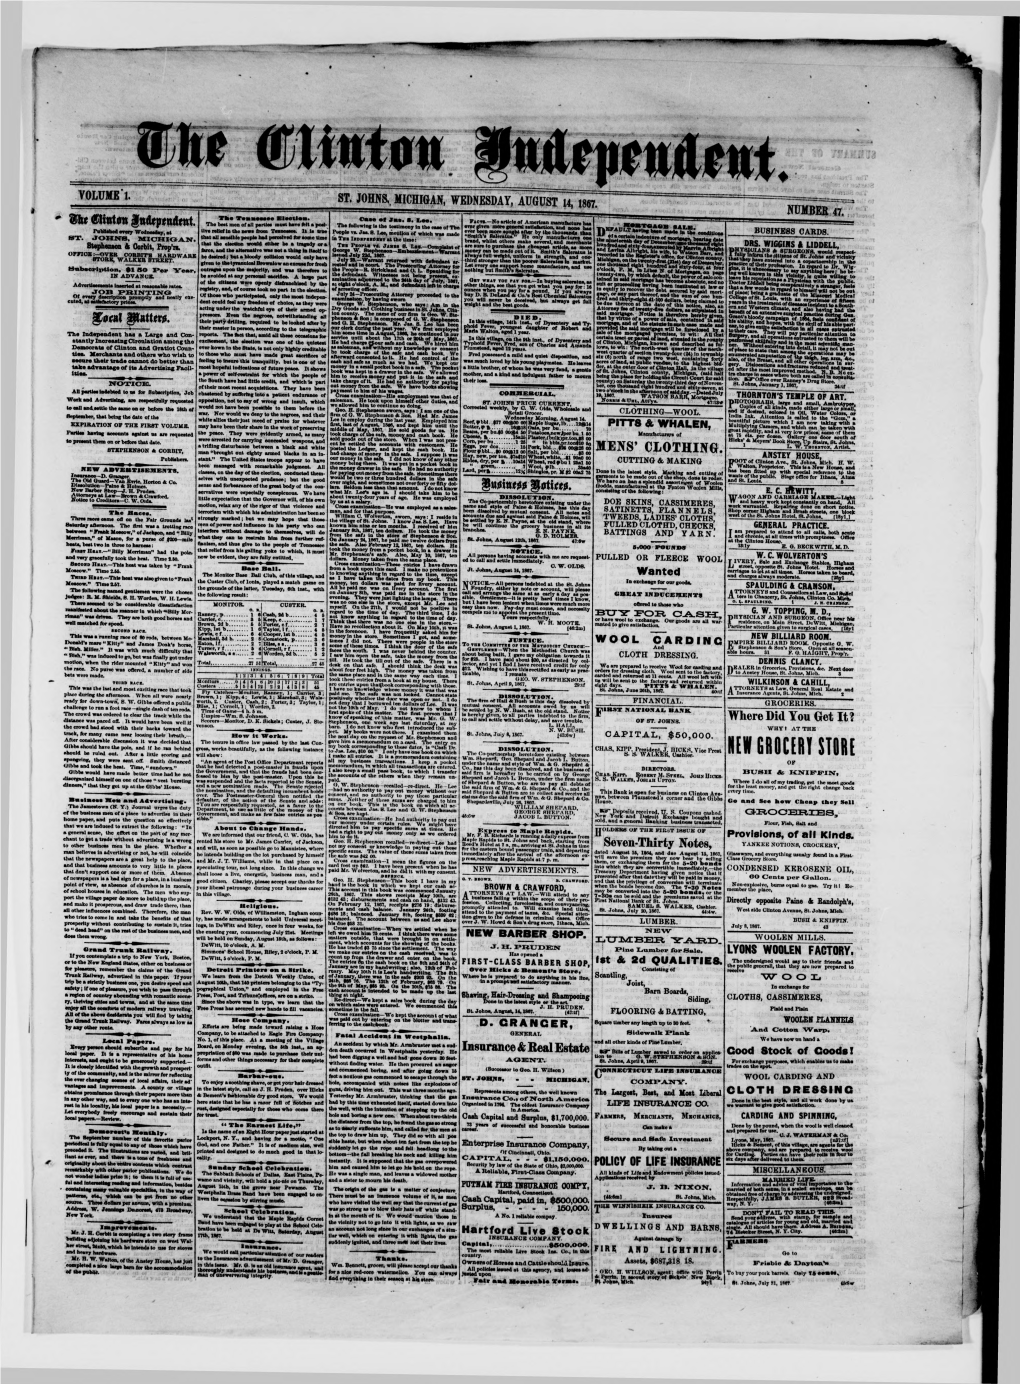 Volume 1. St. Johns. Michigan, Wednesday, August 14, 1867